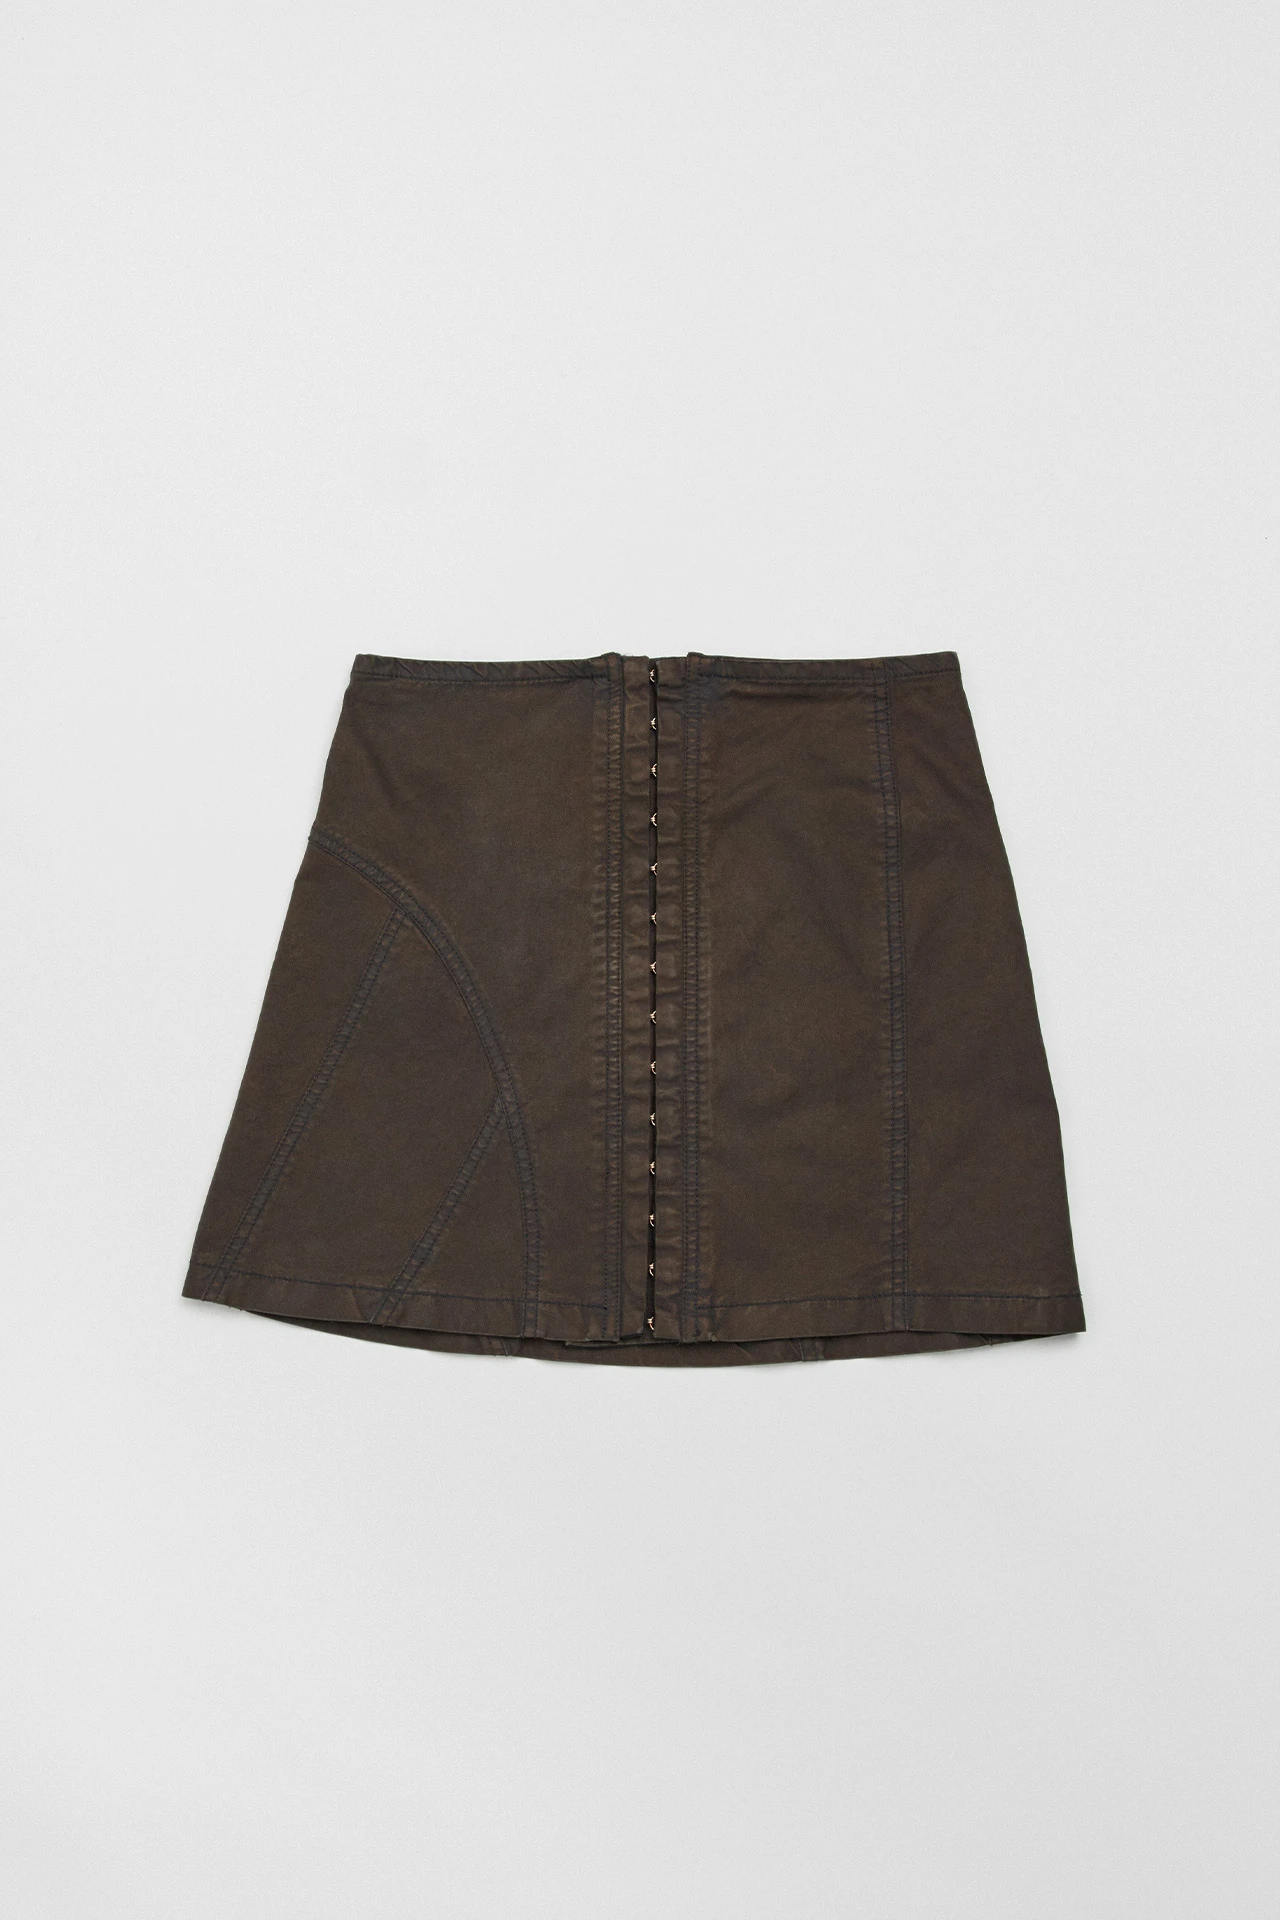 Miista-gil-brown-skirt-01